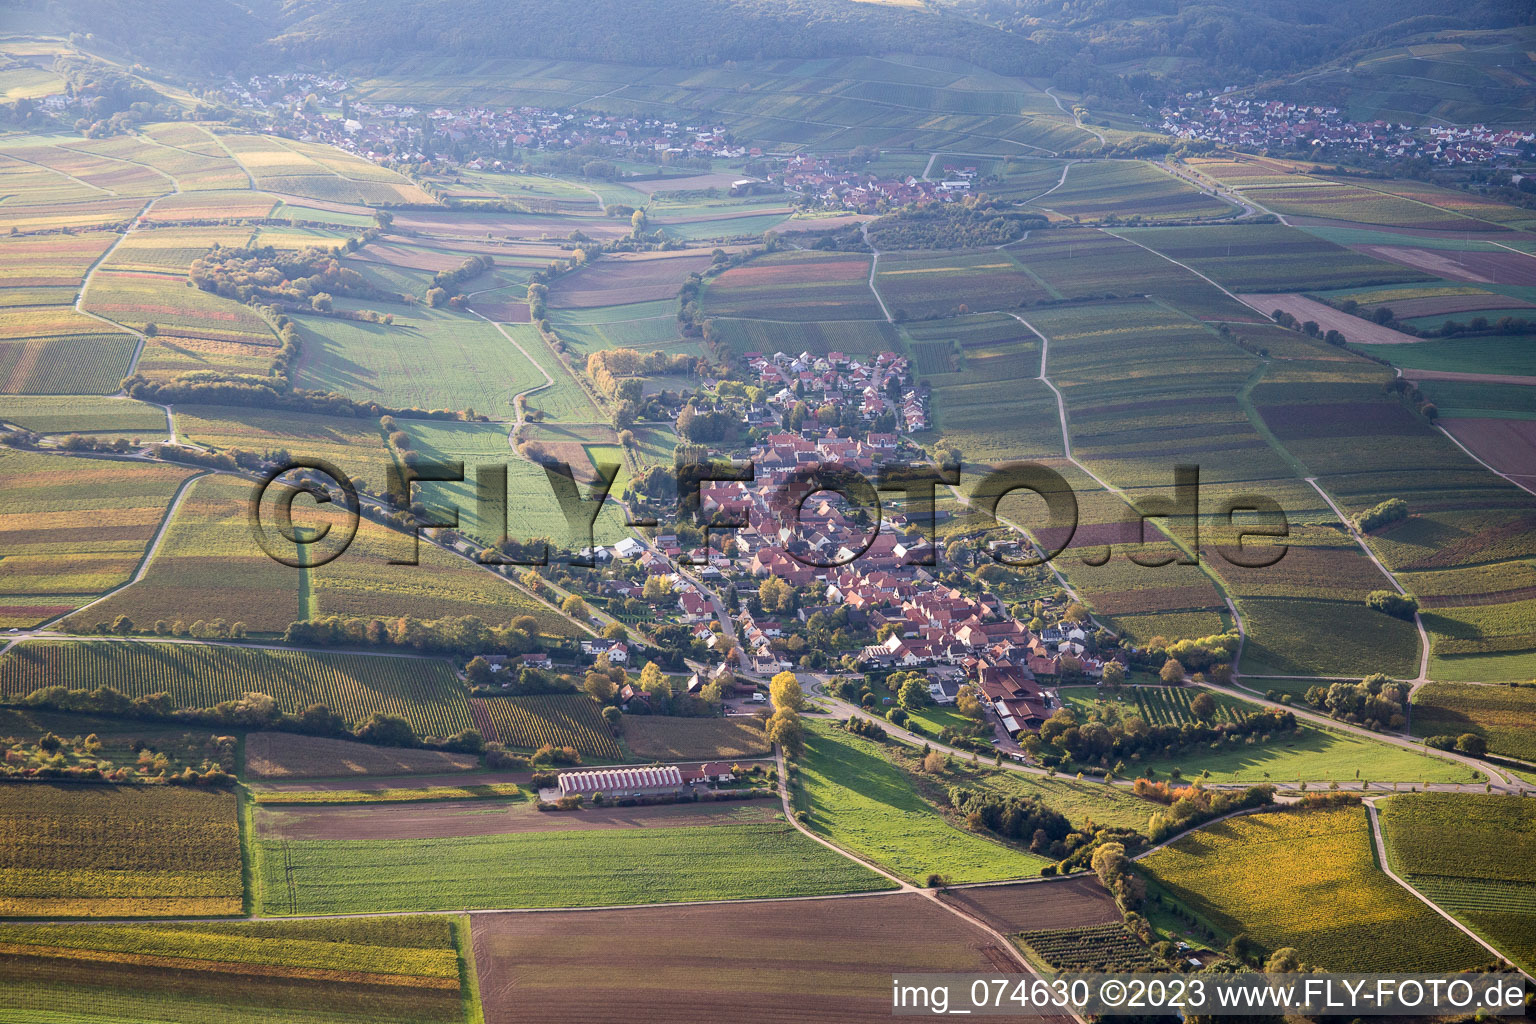 Niederhorbach in the state Rhineland-Palatinate, Germany